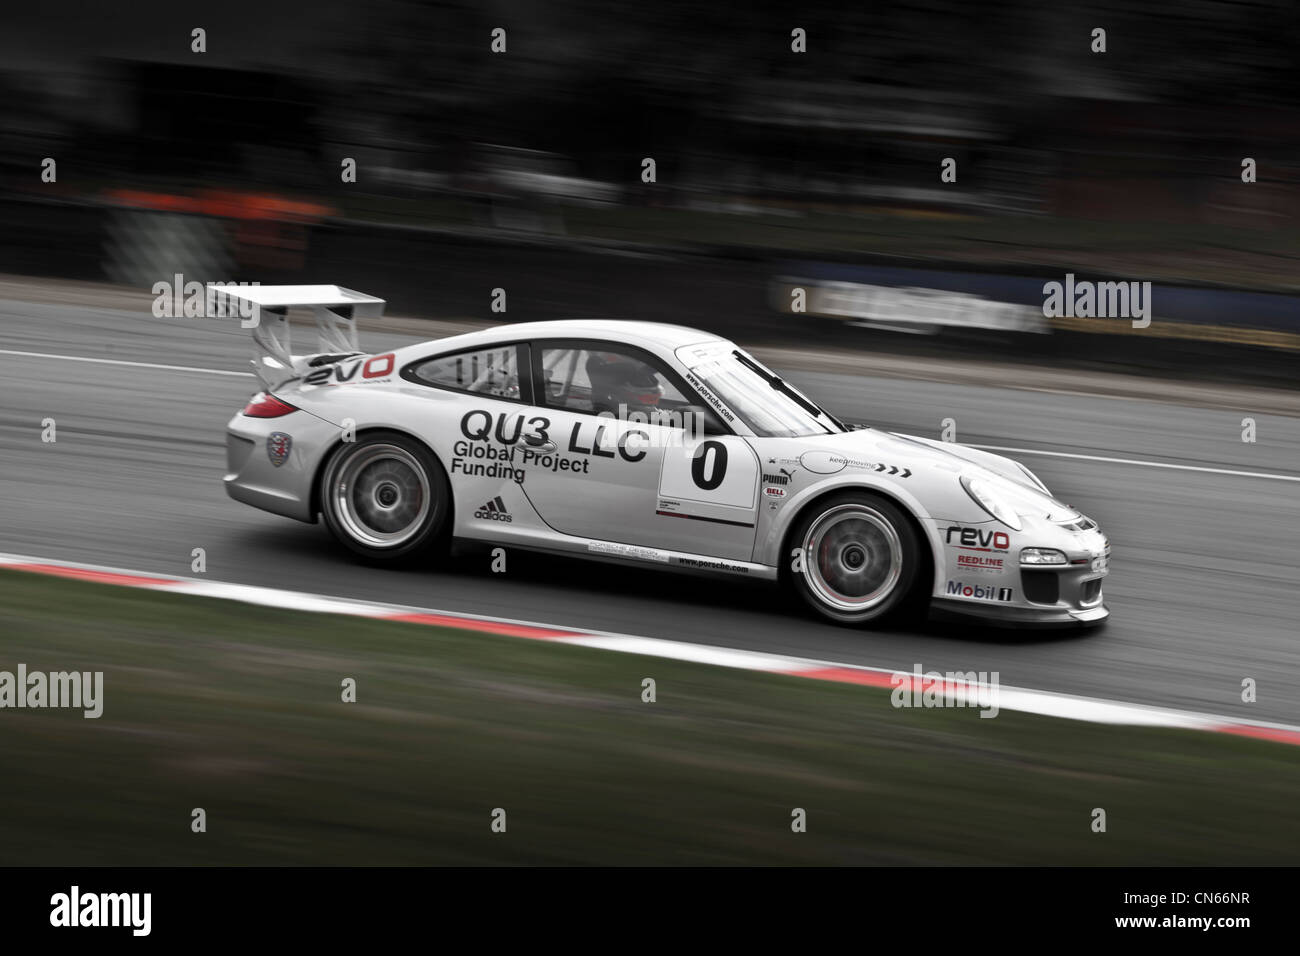 Porsche Carrera Cup, Brands Hatch 31 March 2012 Stock Photo